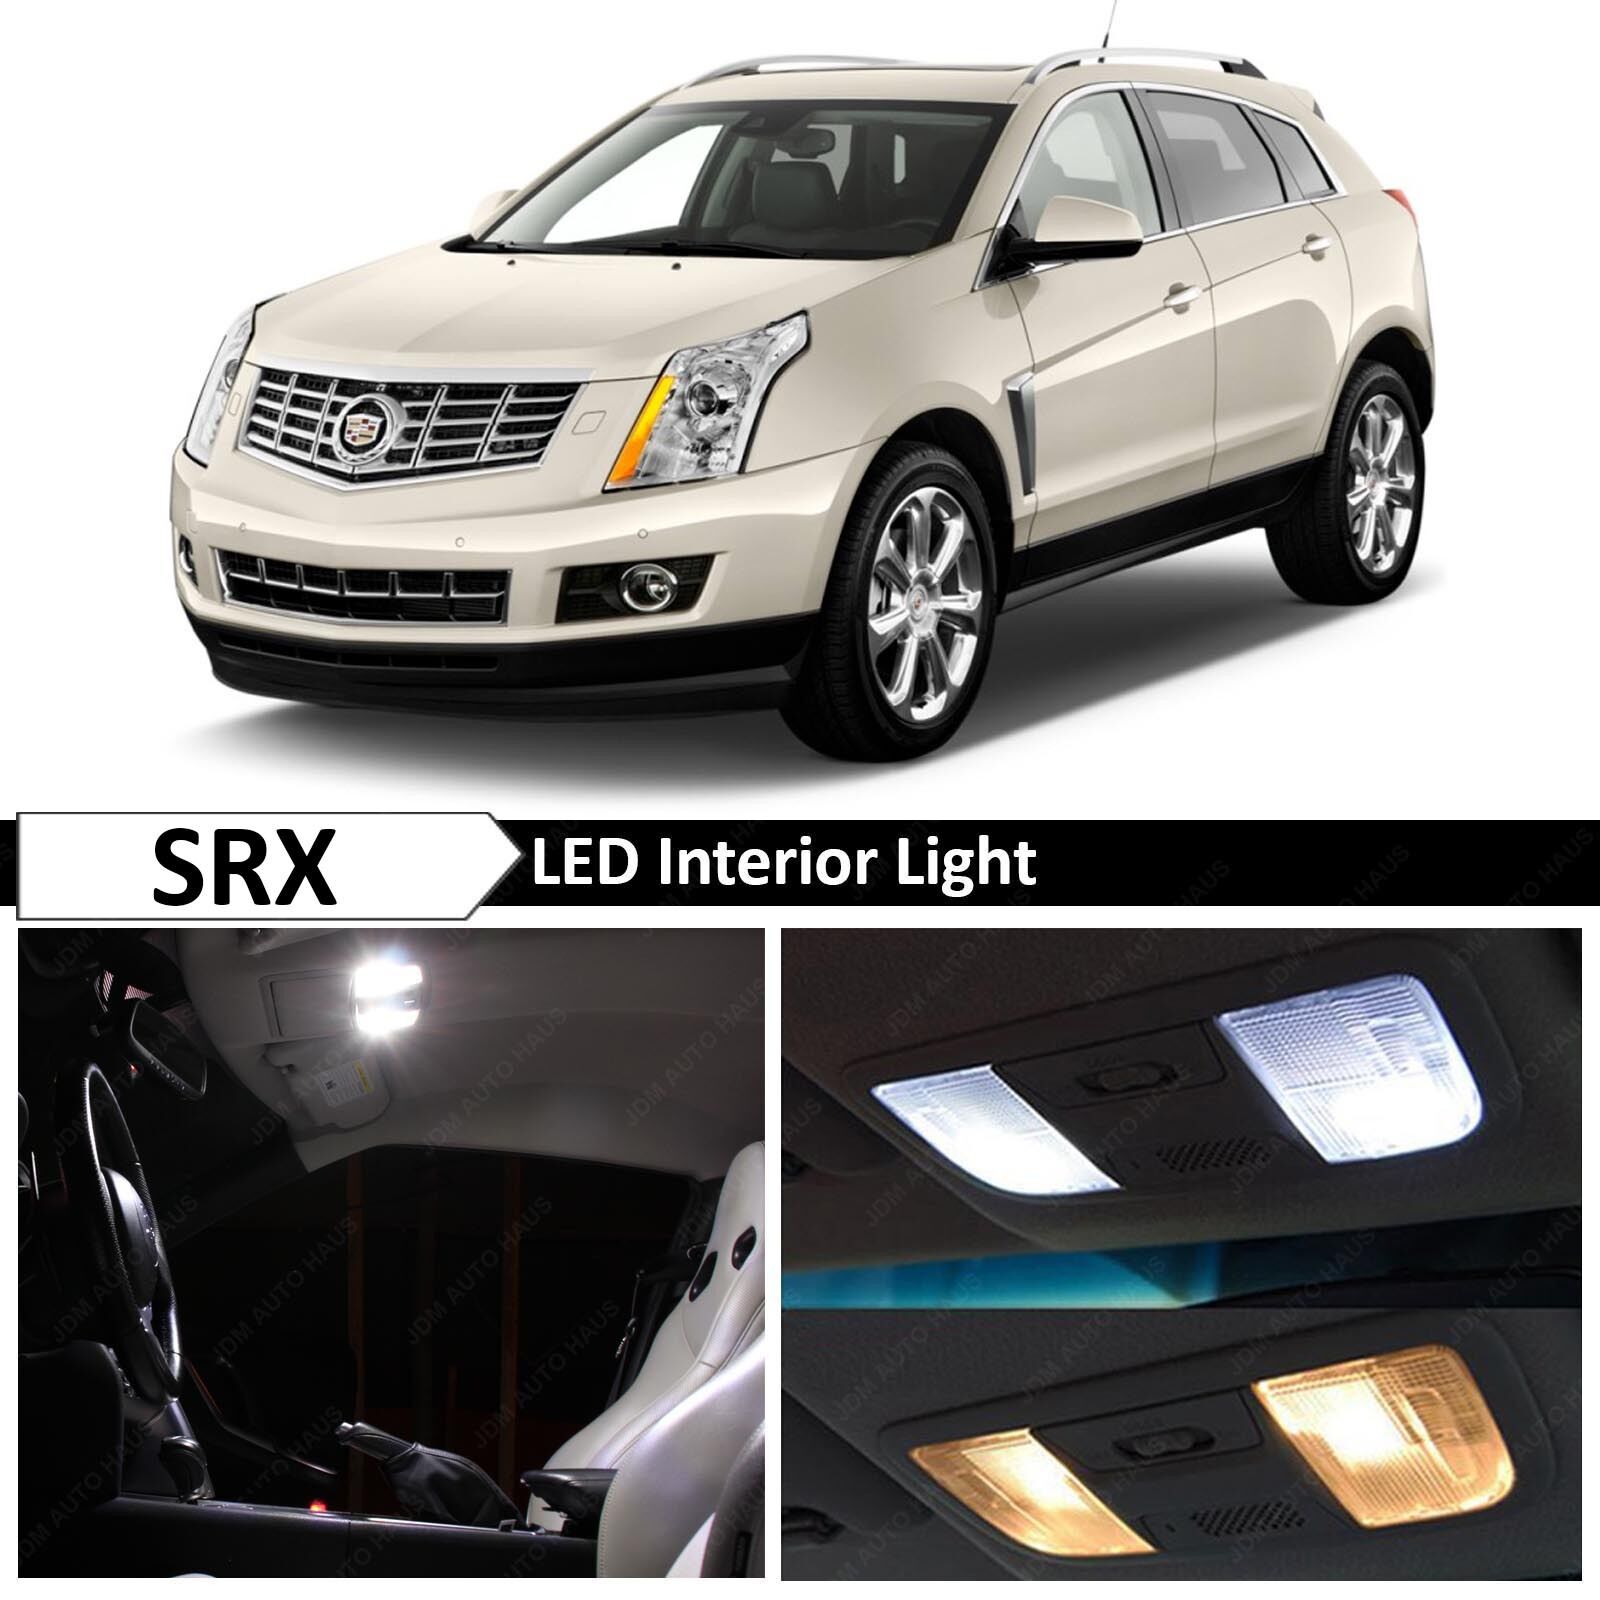 21x White Interior LED Lights Package Kit for 2010-2014 Cadillax SRX